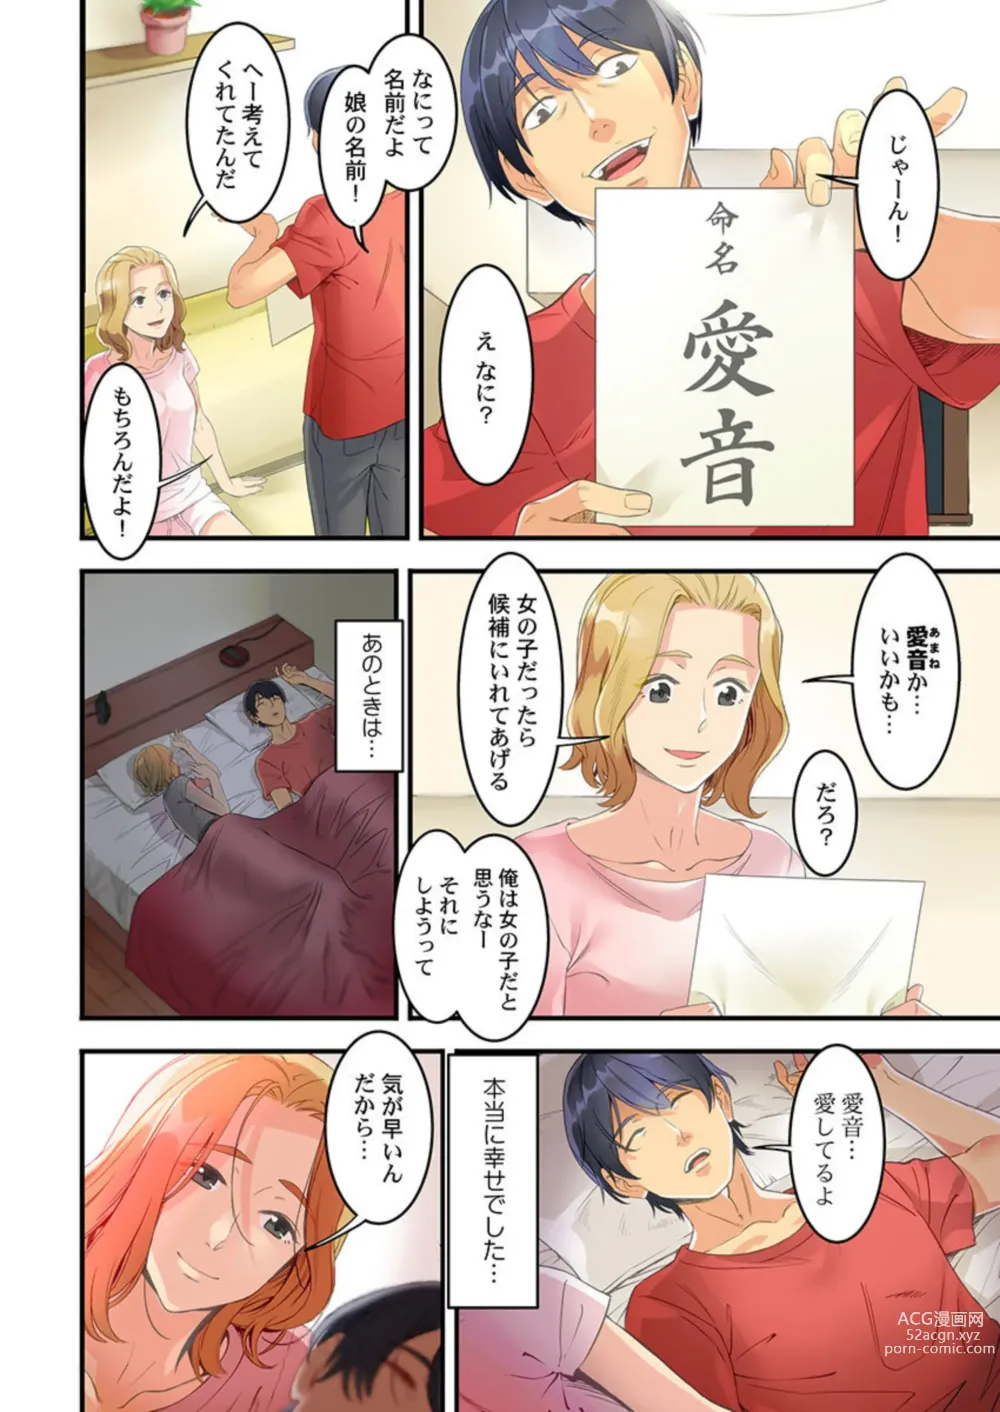 Page 6 of manga Furin Higaisha no kai